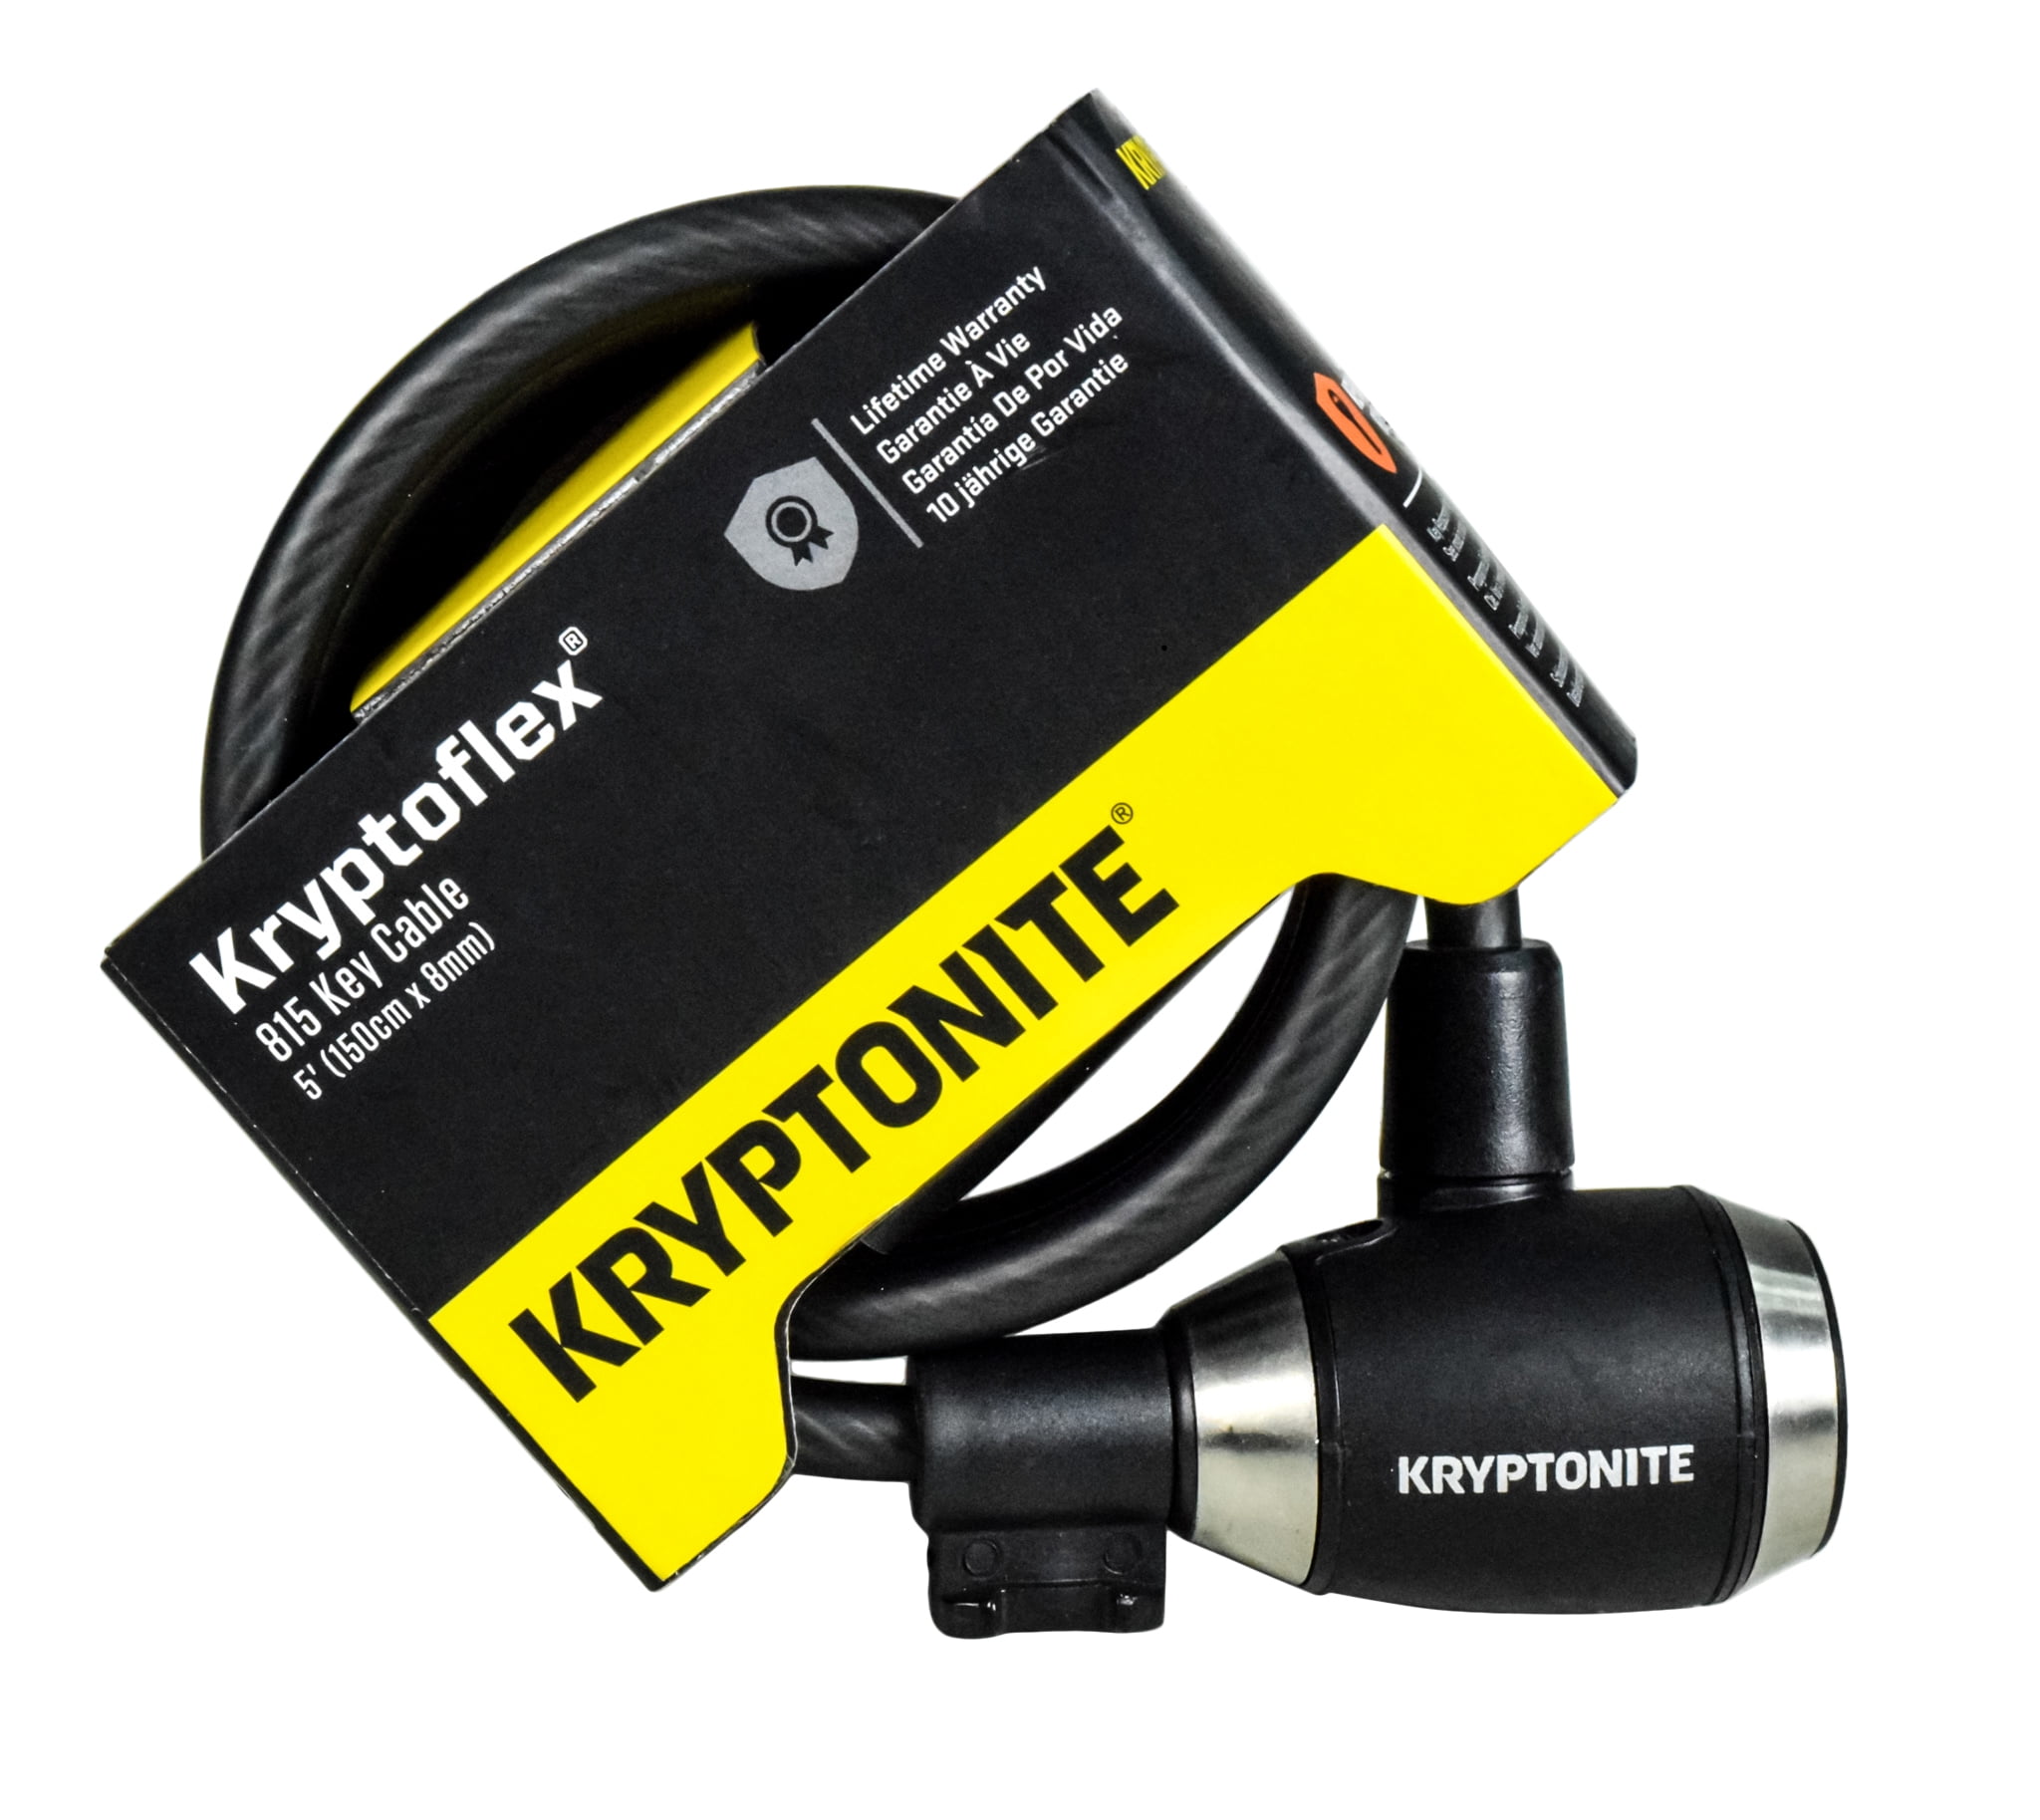 Lock Kryptonite Cable Kryptoflex 815 Combo 5foot X 8mm for sale online